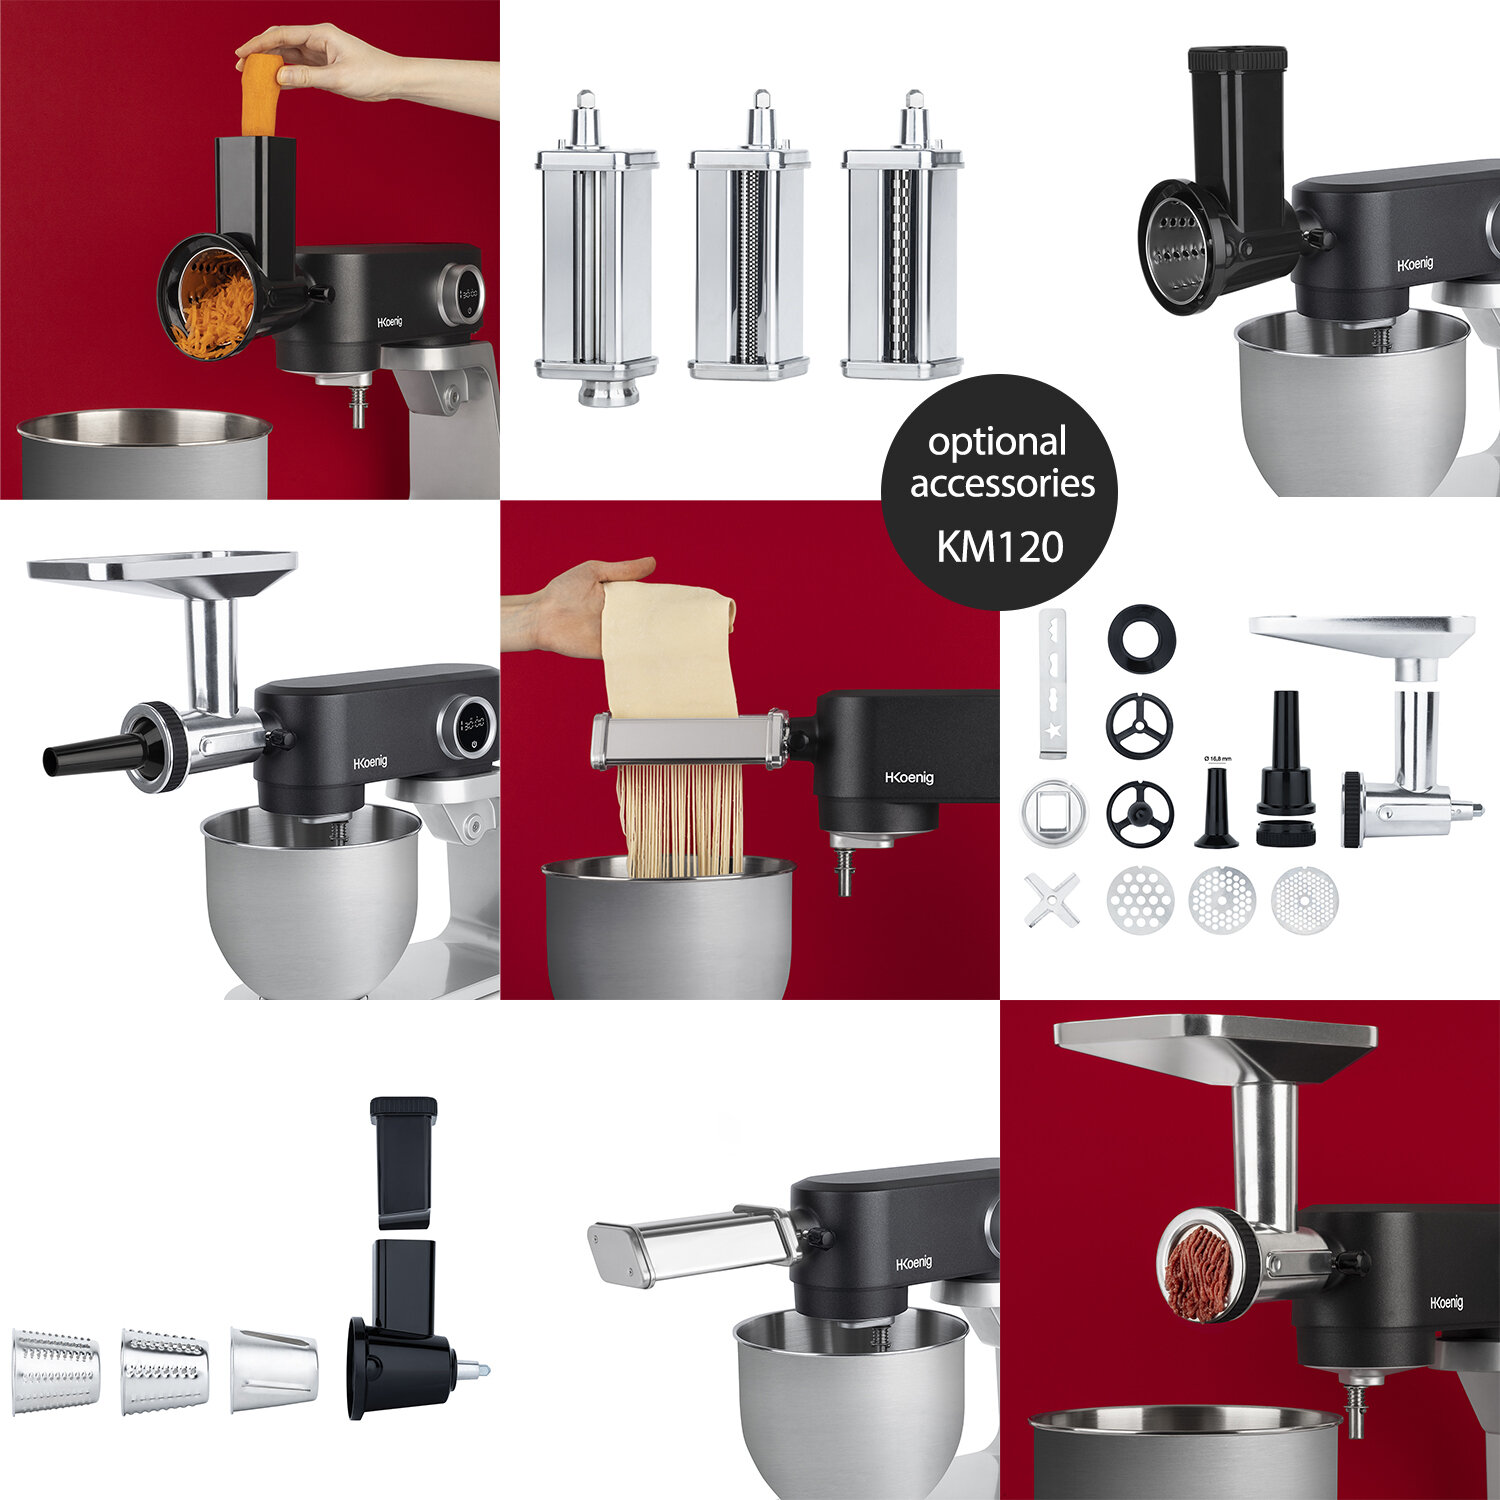 I nostri prodotti > robot da cucina > Set accessori pasta